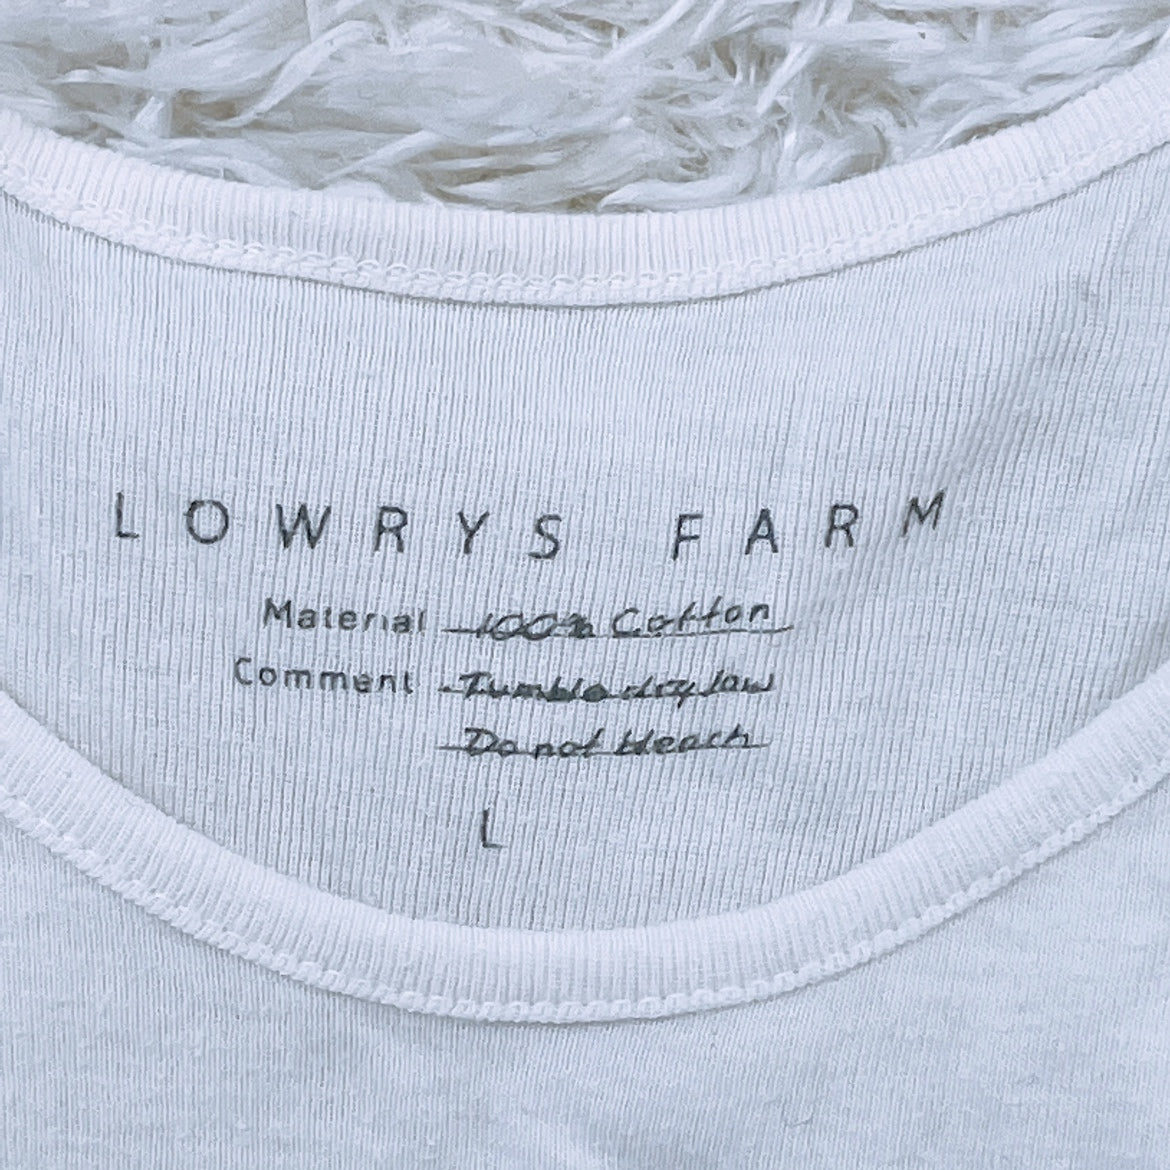 【21815】 LOWRYS FARM ローリーズファーム キャミソール タンクトップ 白 ホワイト L シンプル 無地